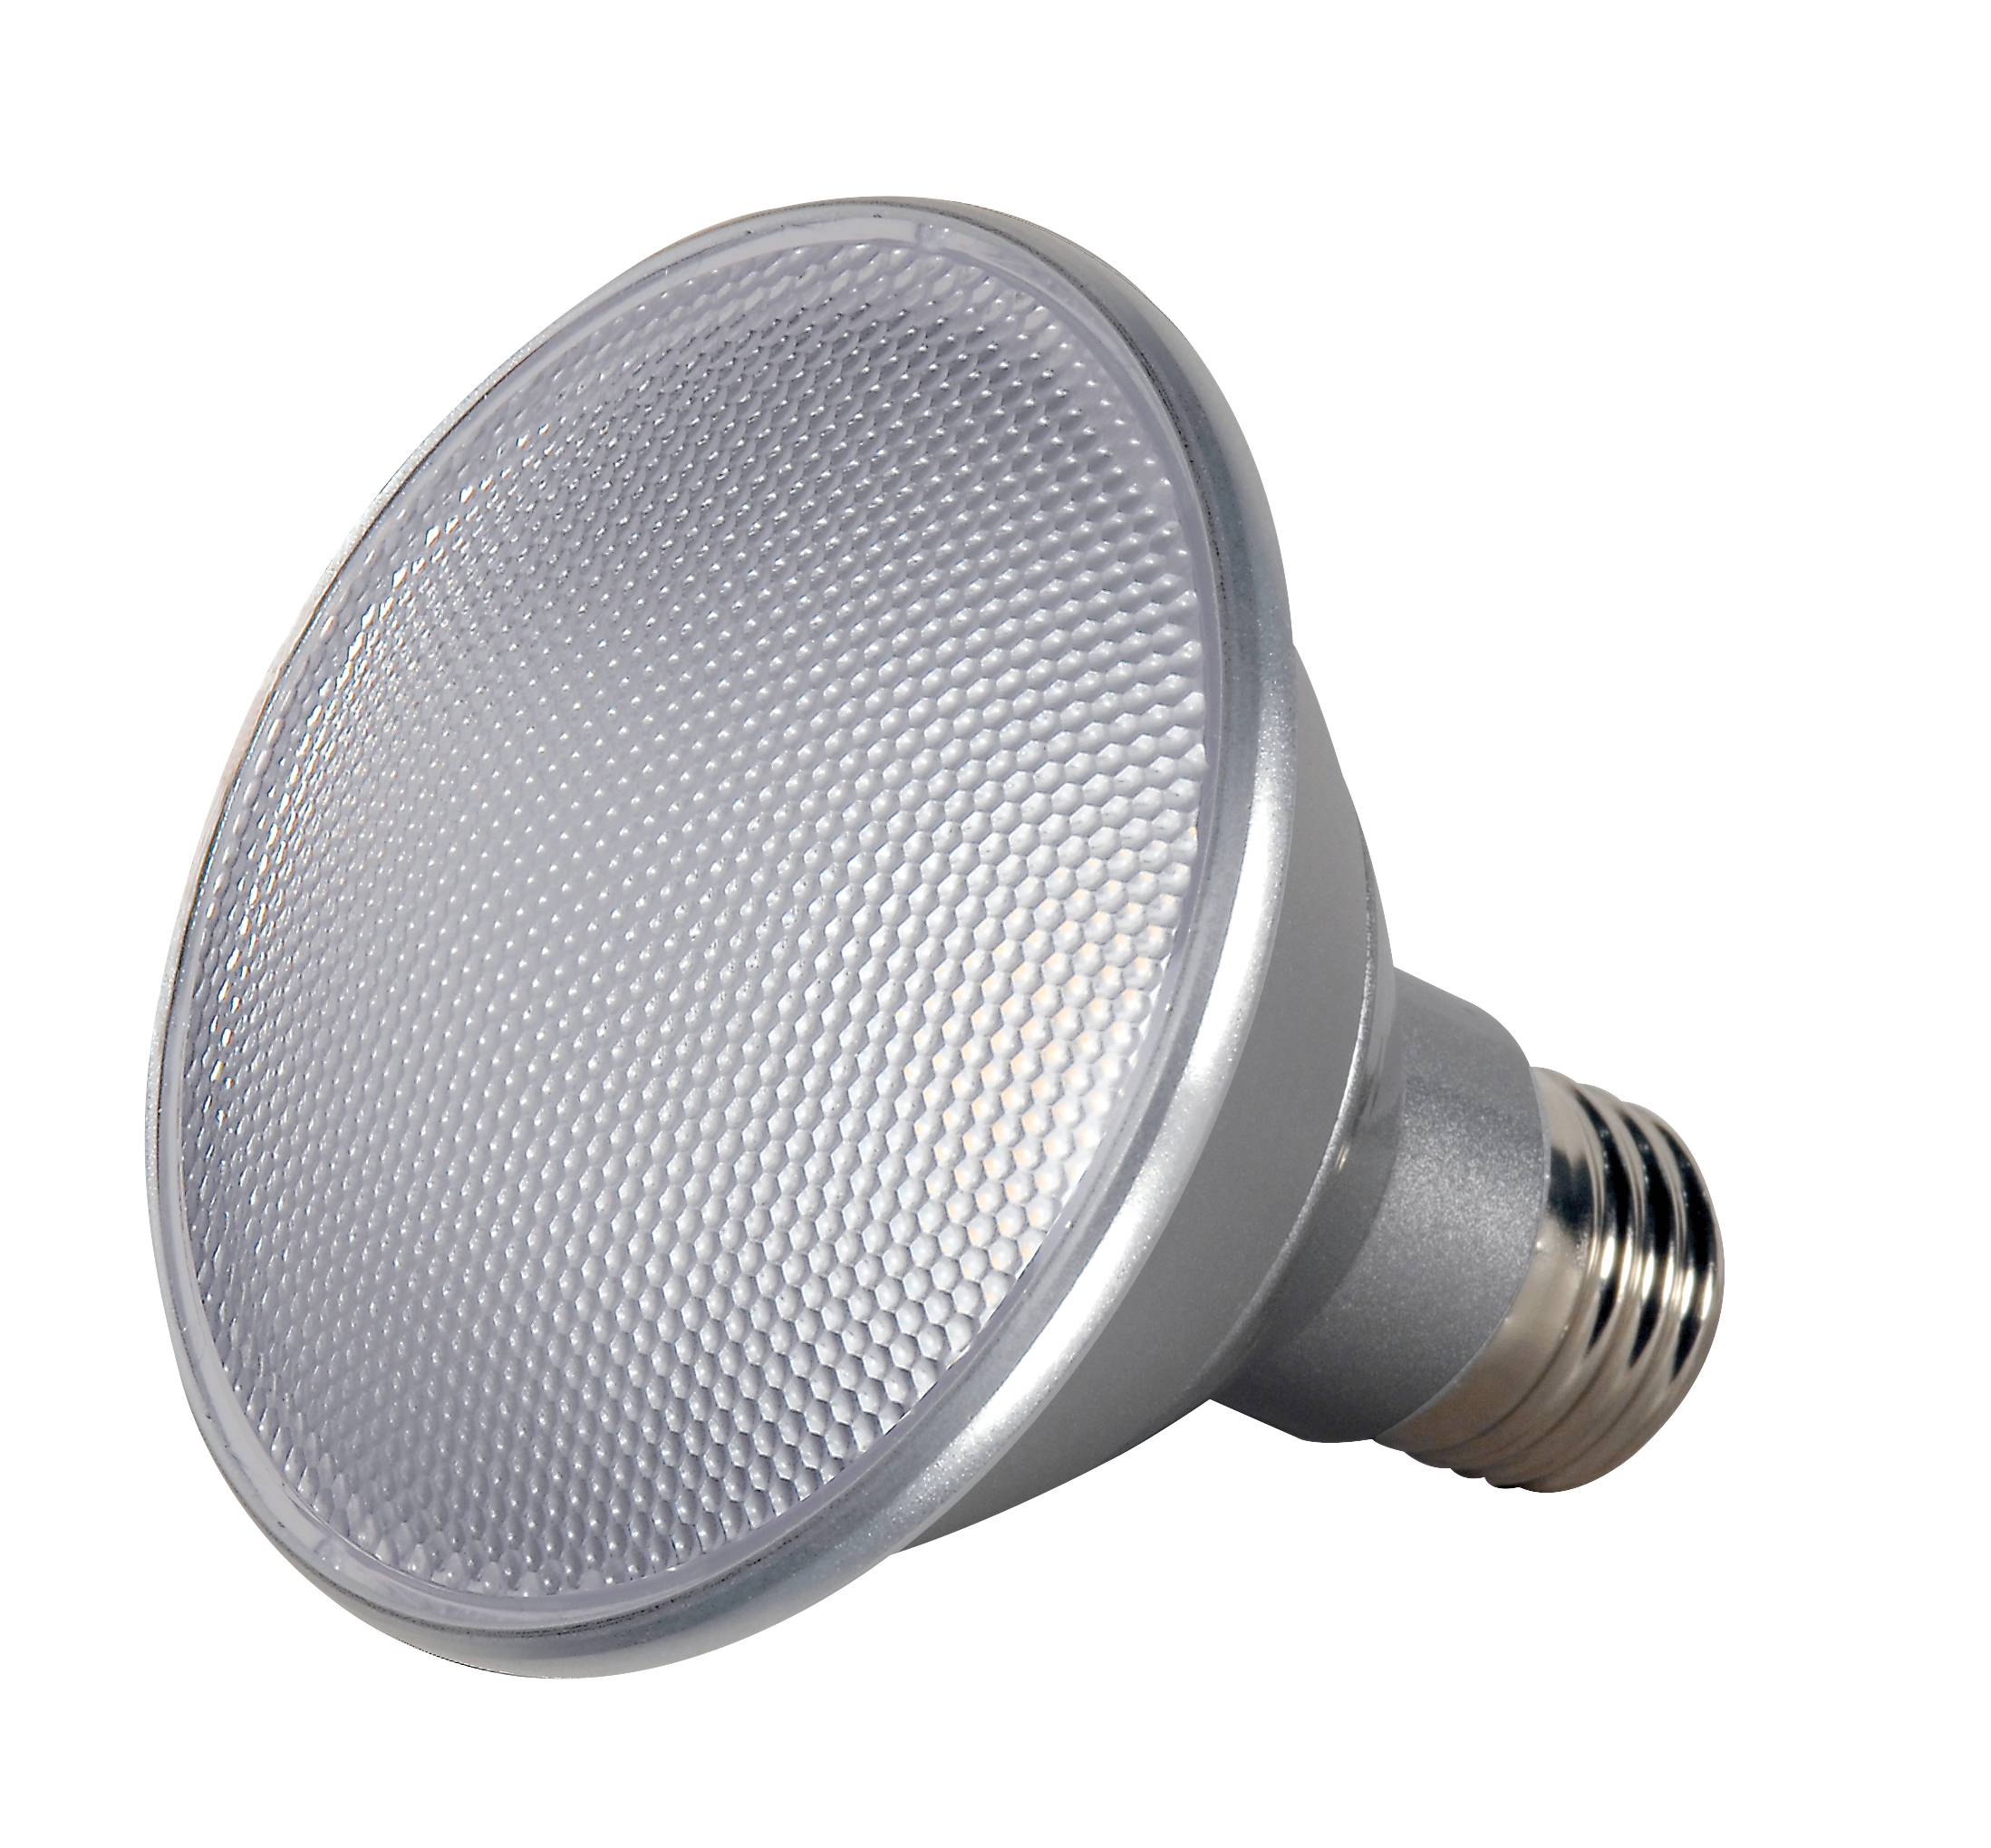 SATCO® S9417 LED Reflective Lamp, 13 W, 50 W Incandescent Equivalent, E26 Medium LED Lamp, PAR30SN Shape, 1000 Lumens